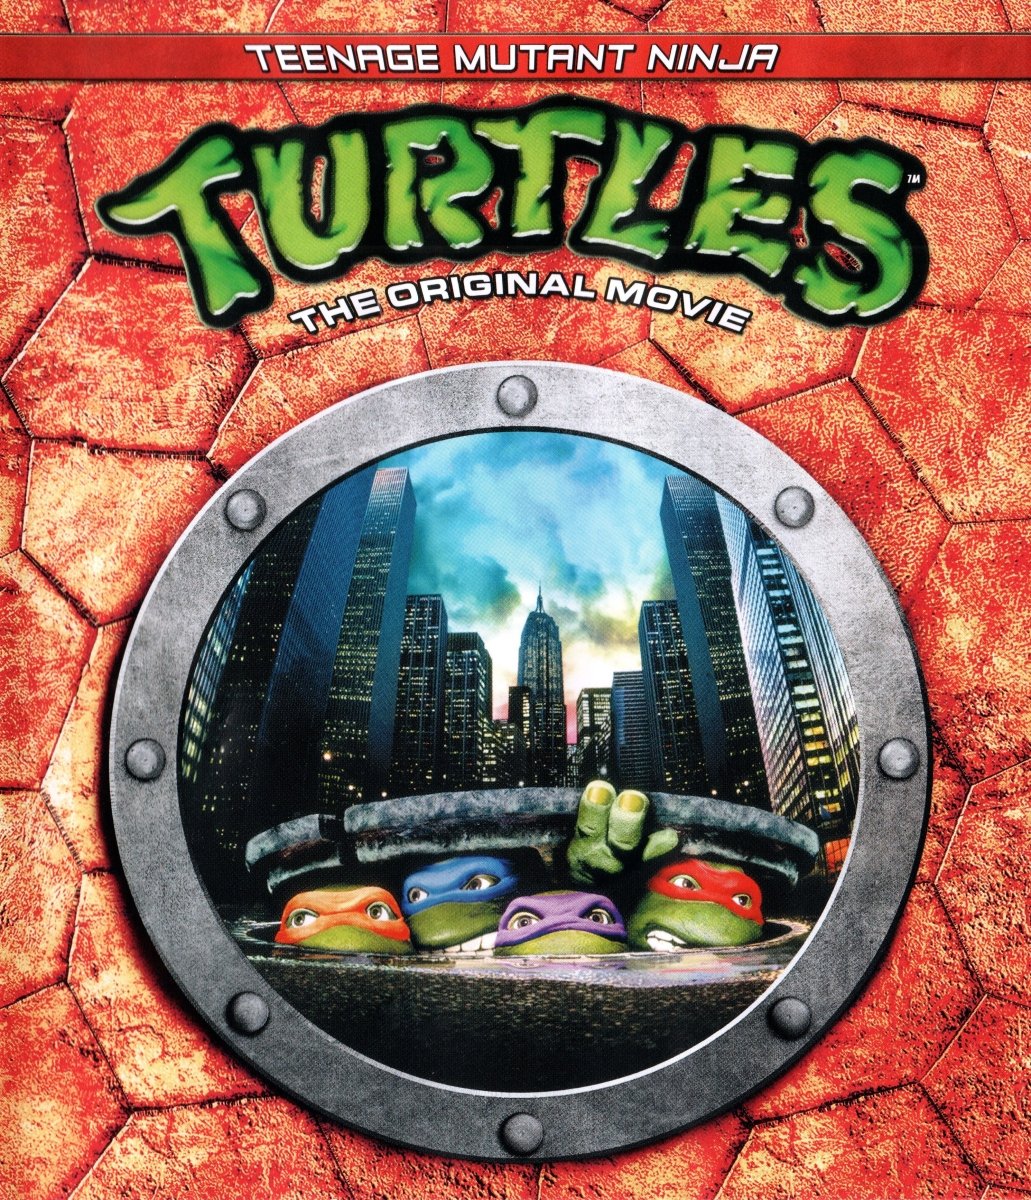 Teenage Mutant Ninja Turtles: The Original Movie - Blu-ray - Retro Island Gaming